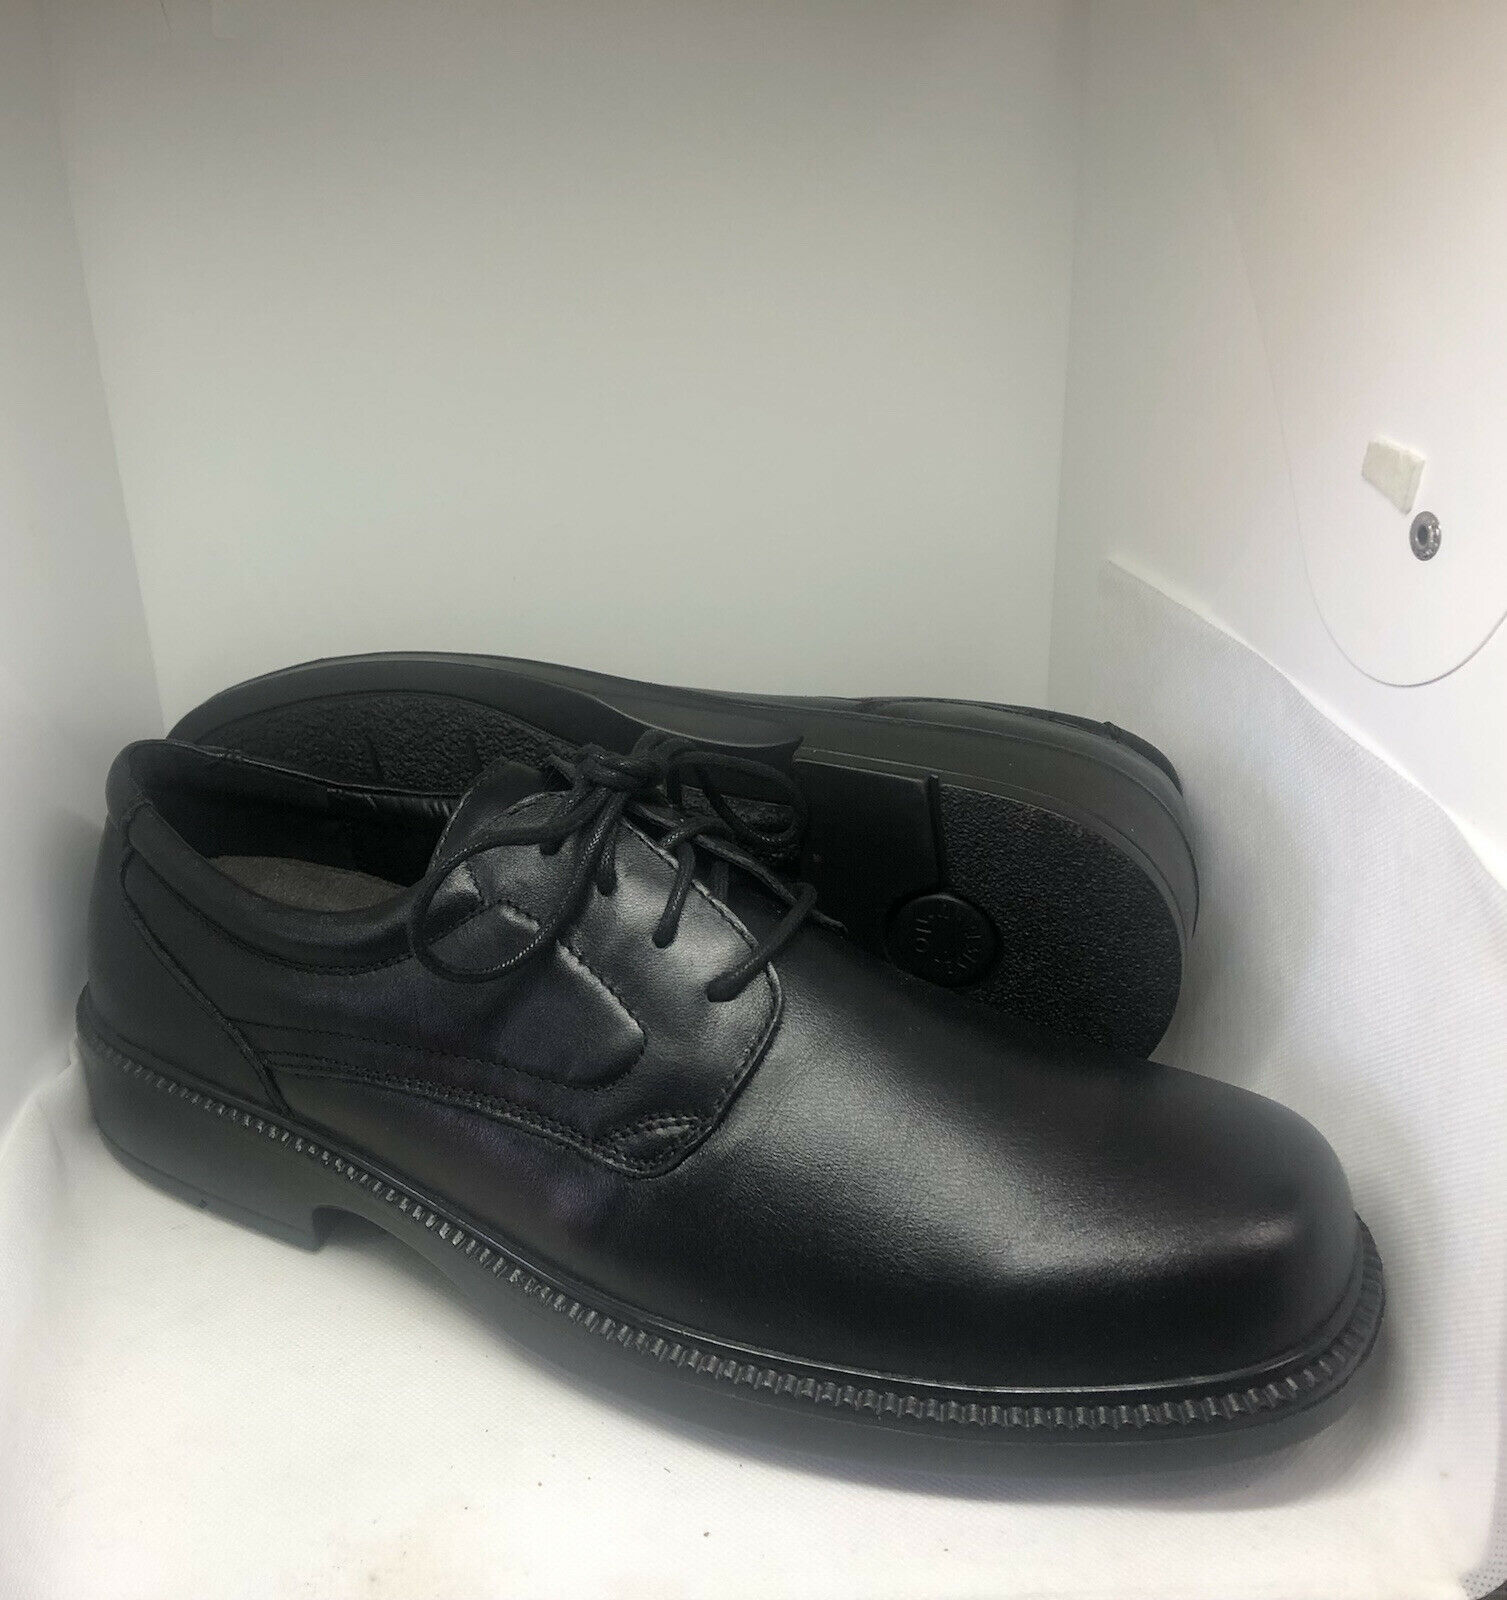 Urban Trends  shoes men's leather lice up black color size 12